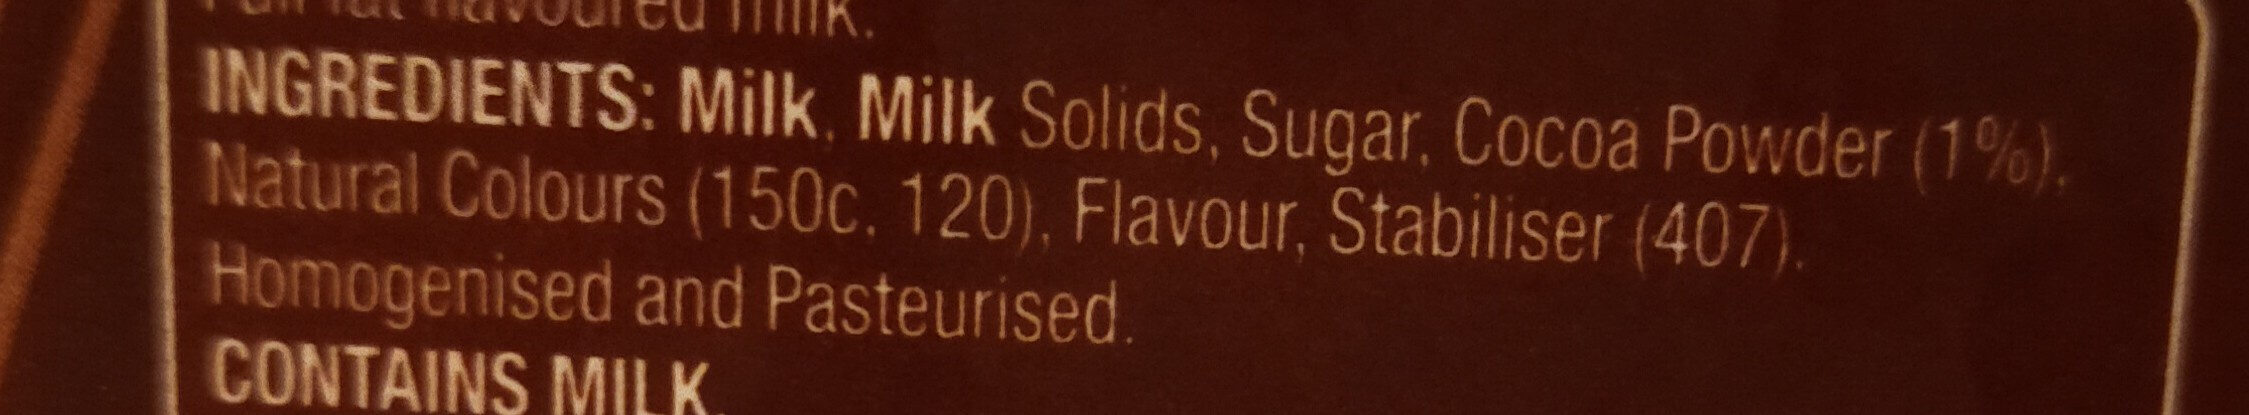 Chocolate milk - Ingredients